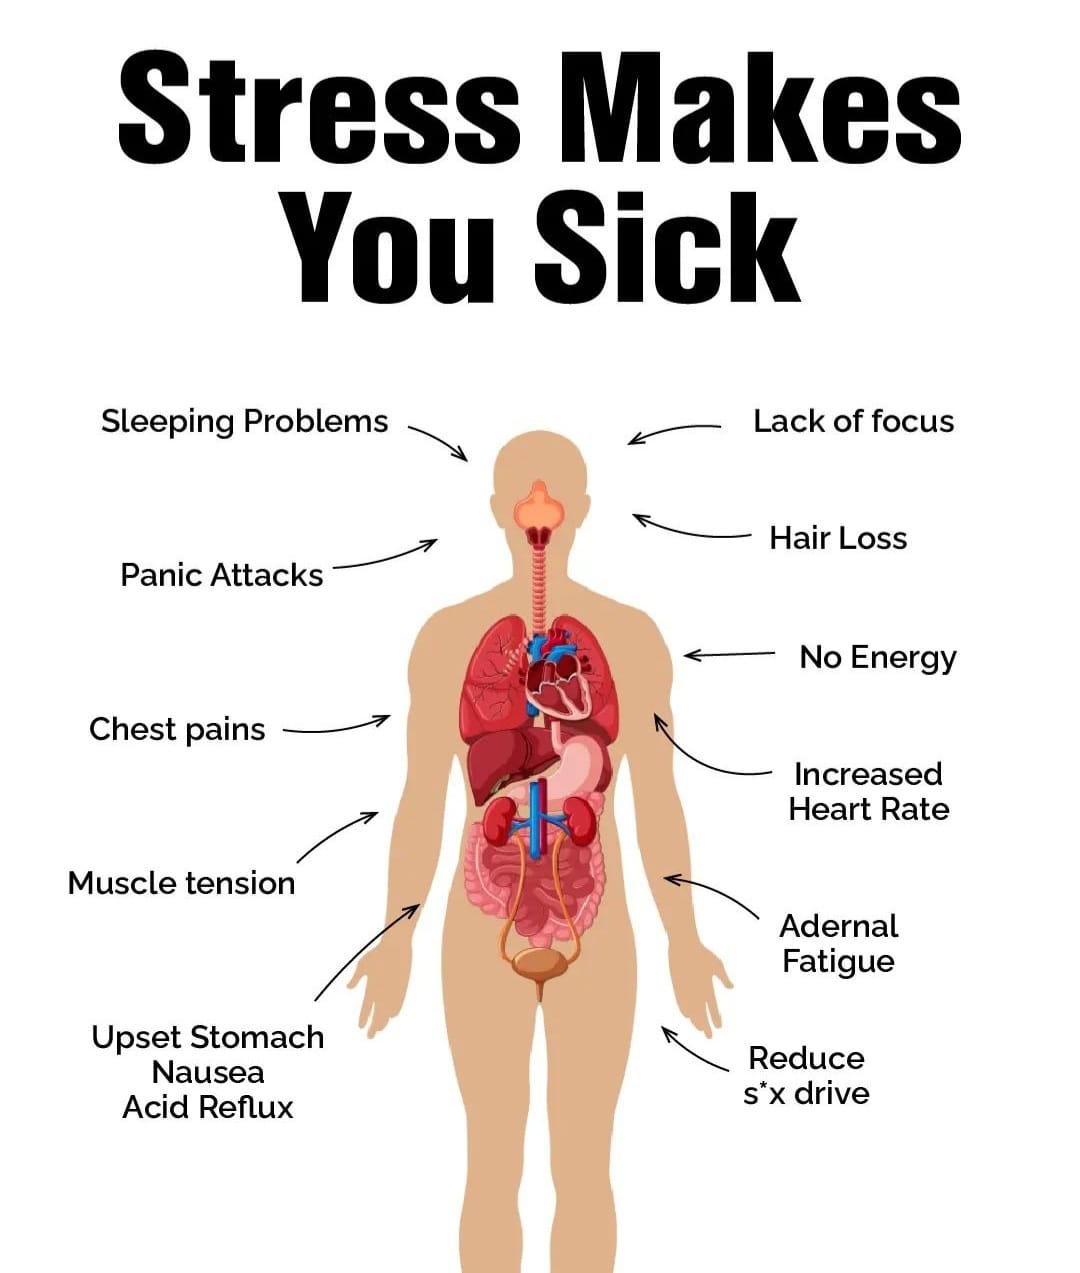 Inspiration Wiz on Twitter: "Stress Makes You Sick !  https://t.co/zgO6HGW88d" / Twitter